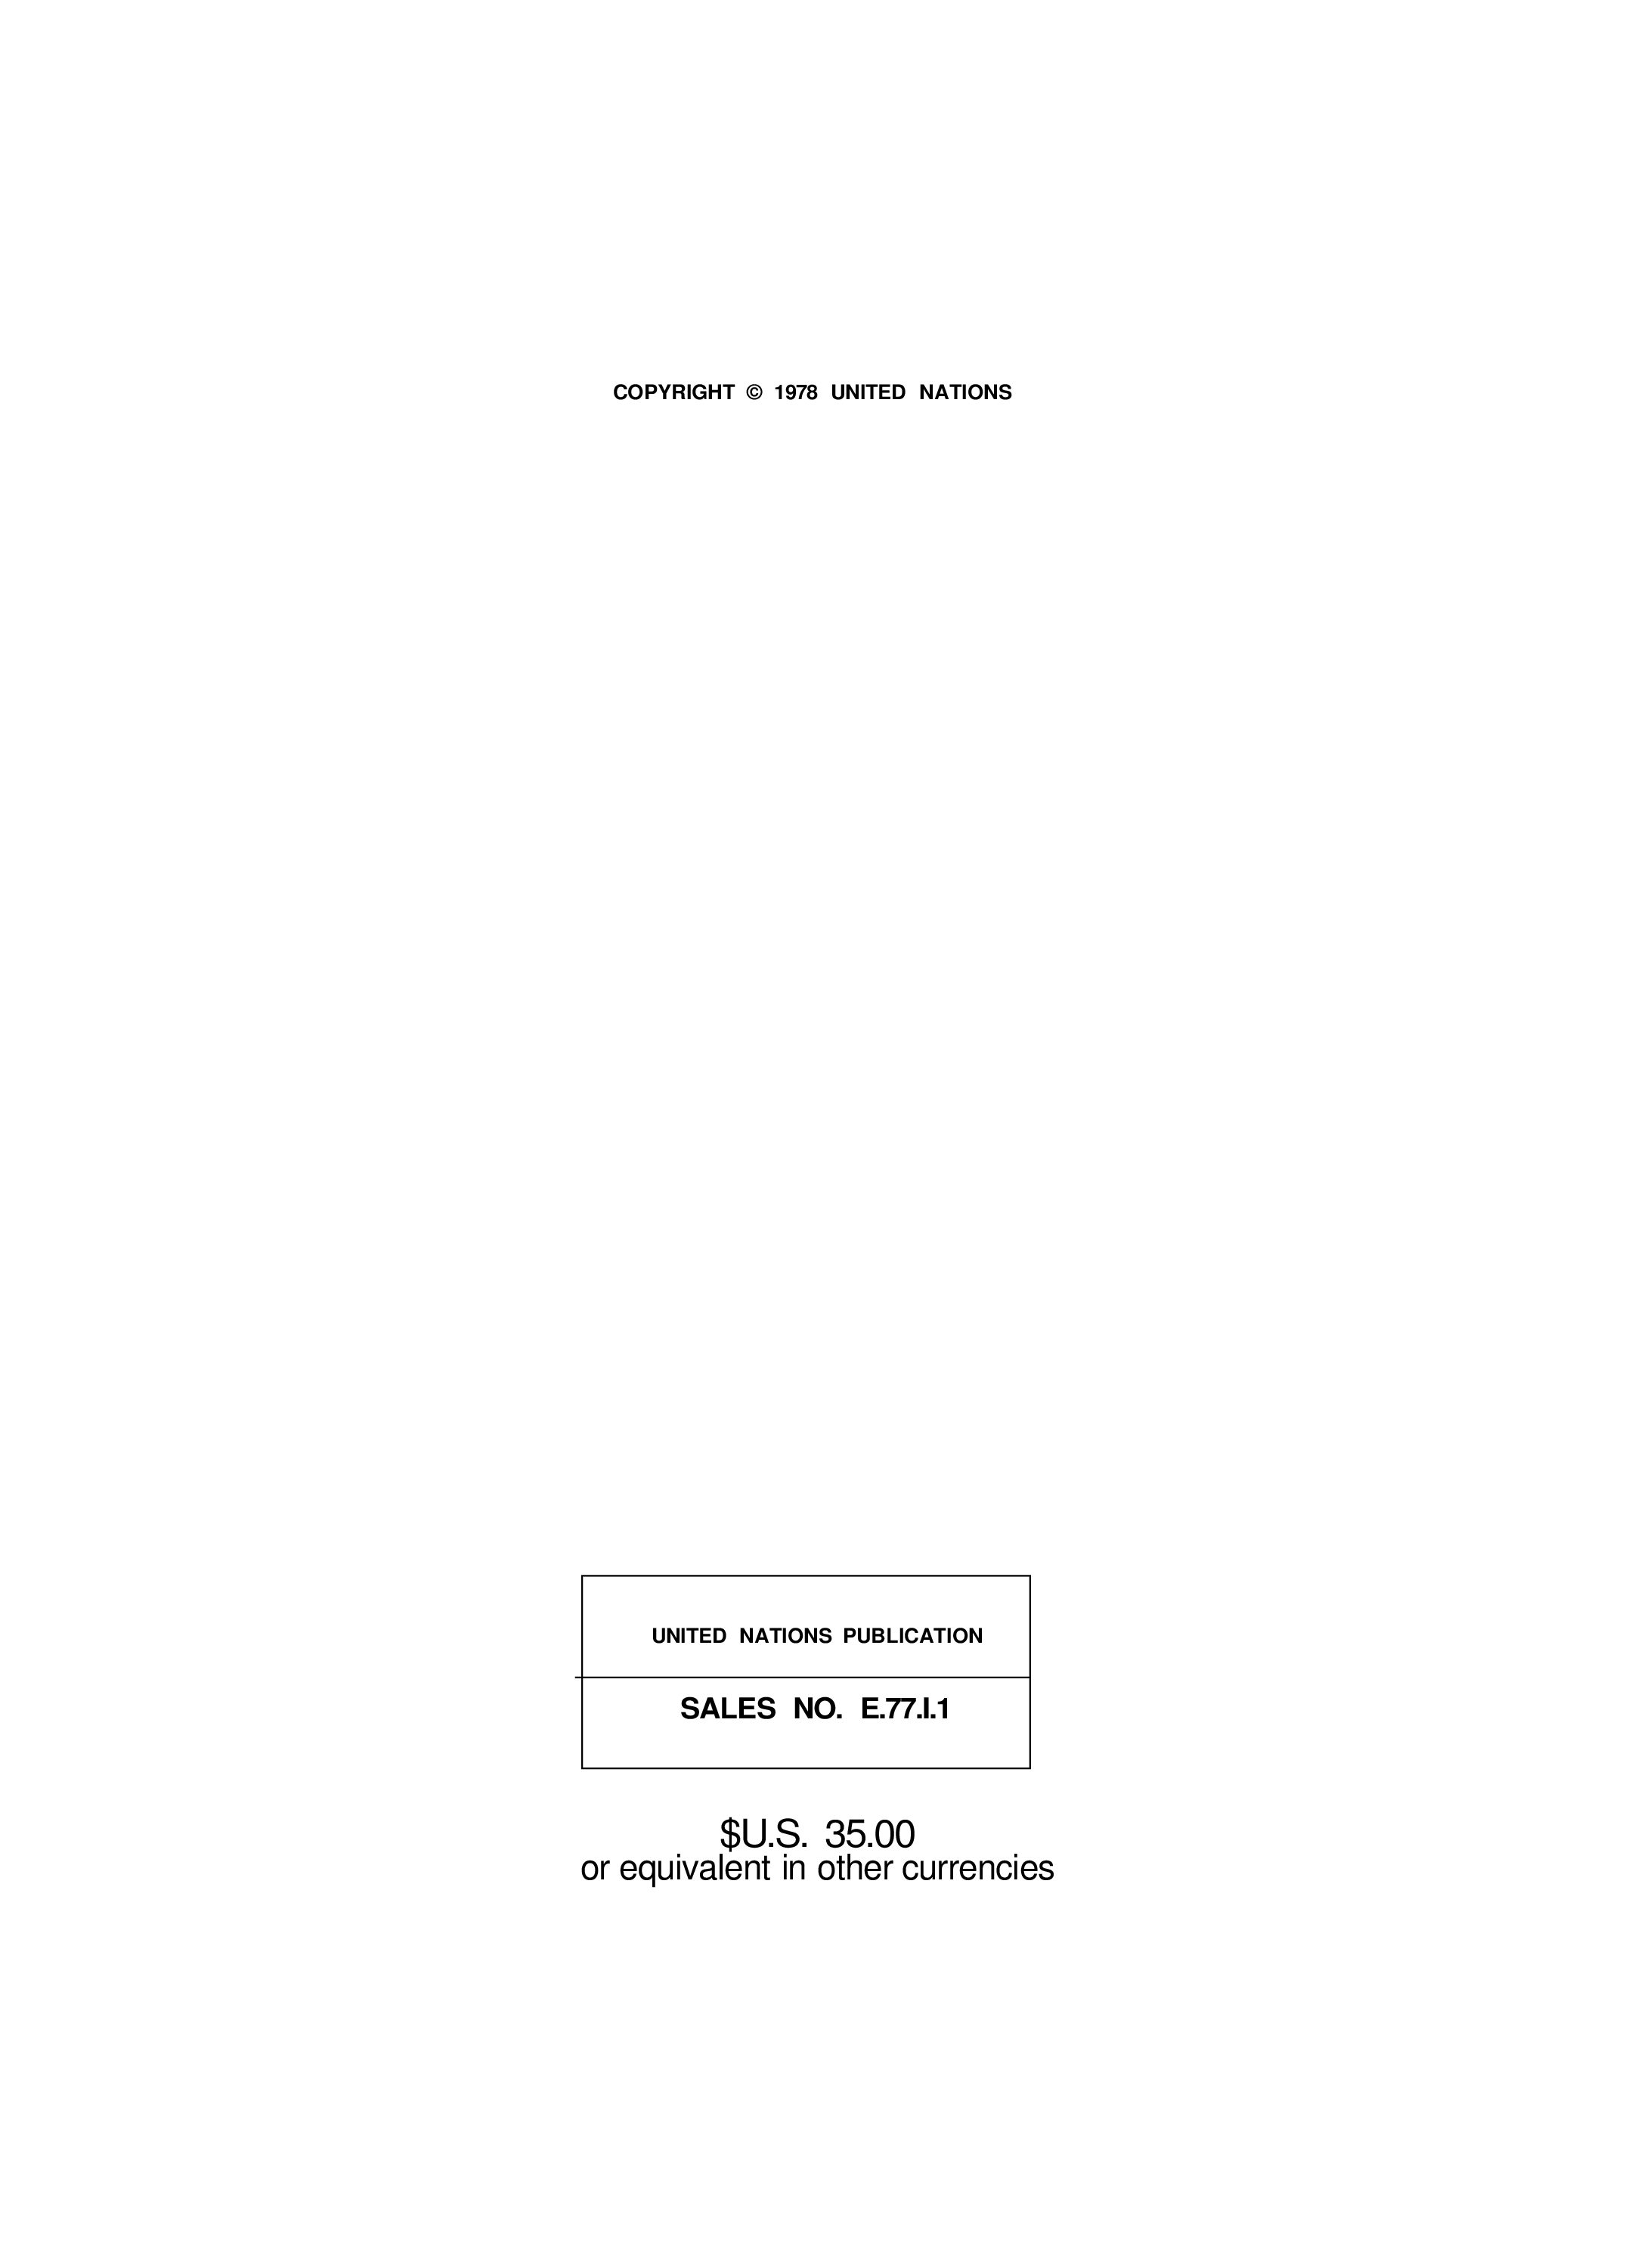 YUN Volume_Page 1975_3